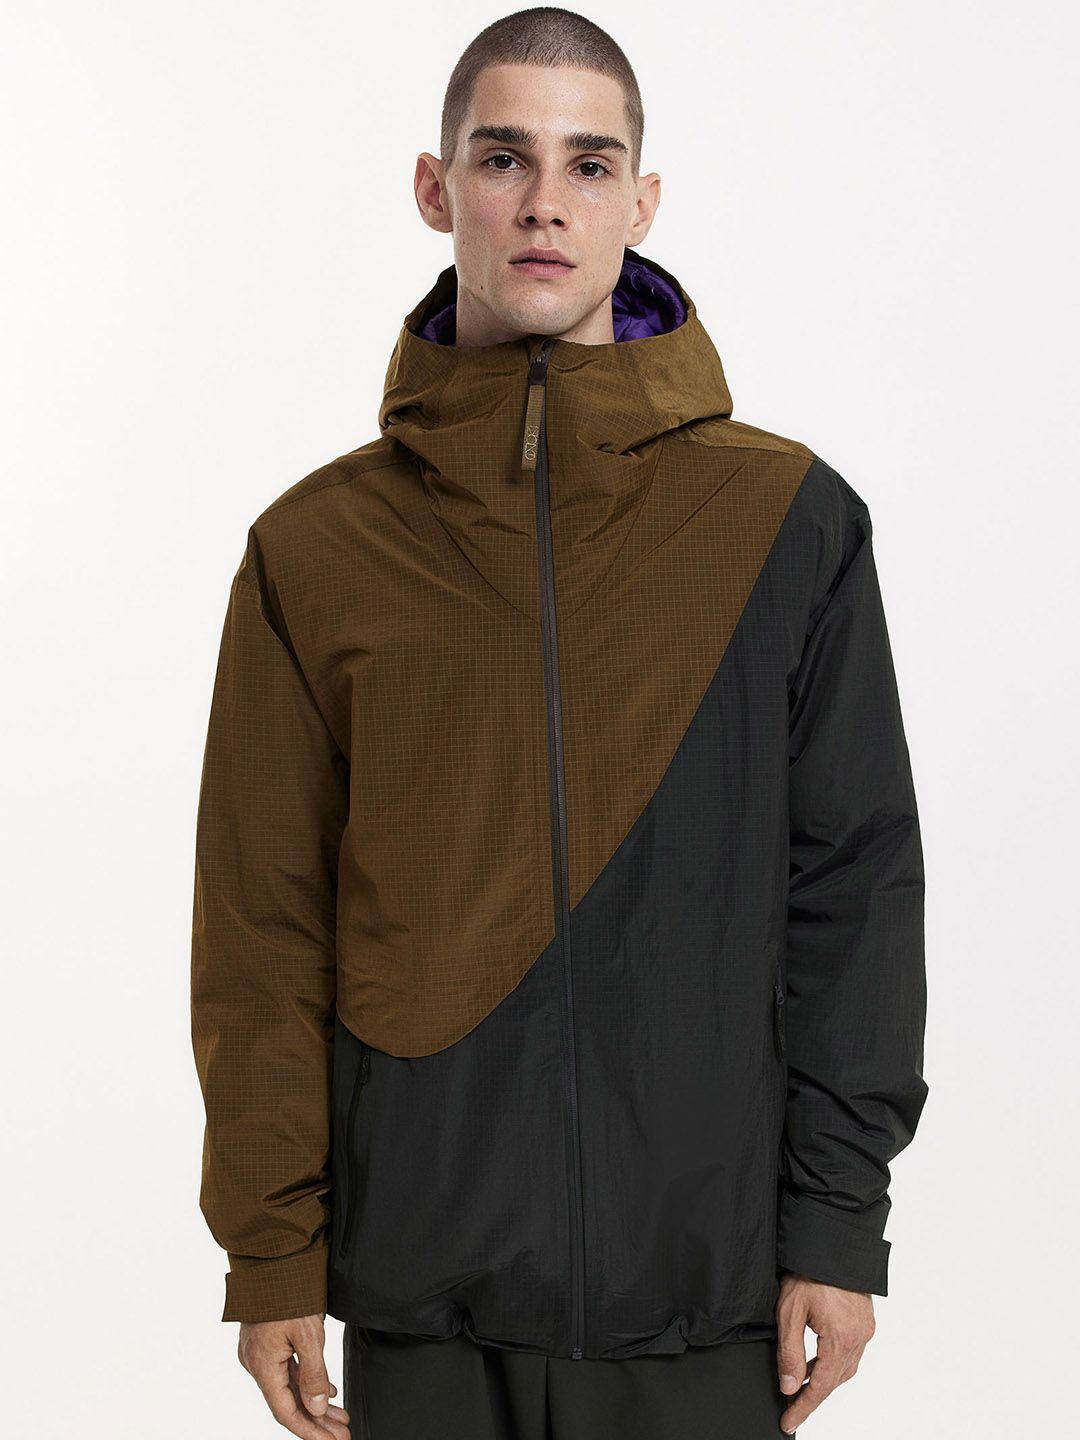 h&m stormmove 2.5-layer shell jacket